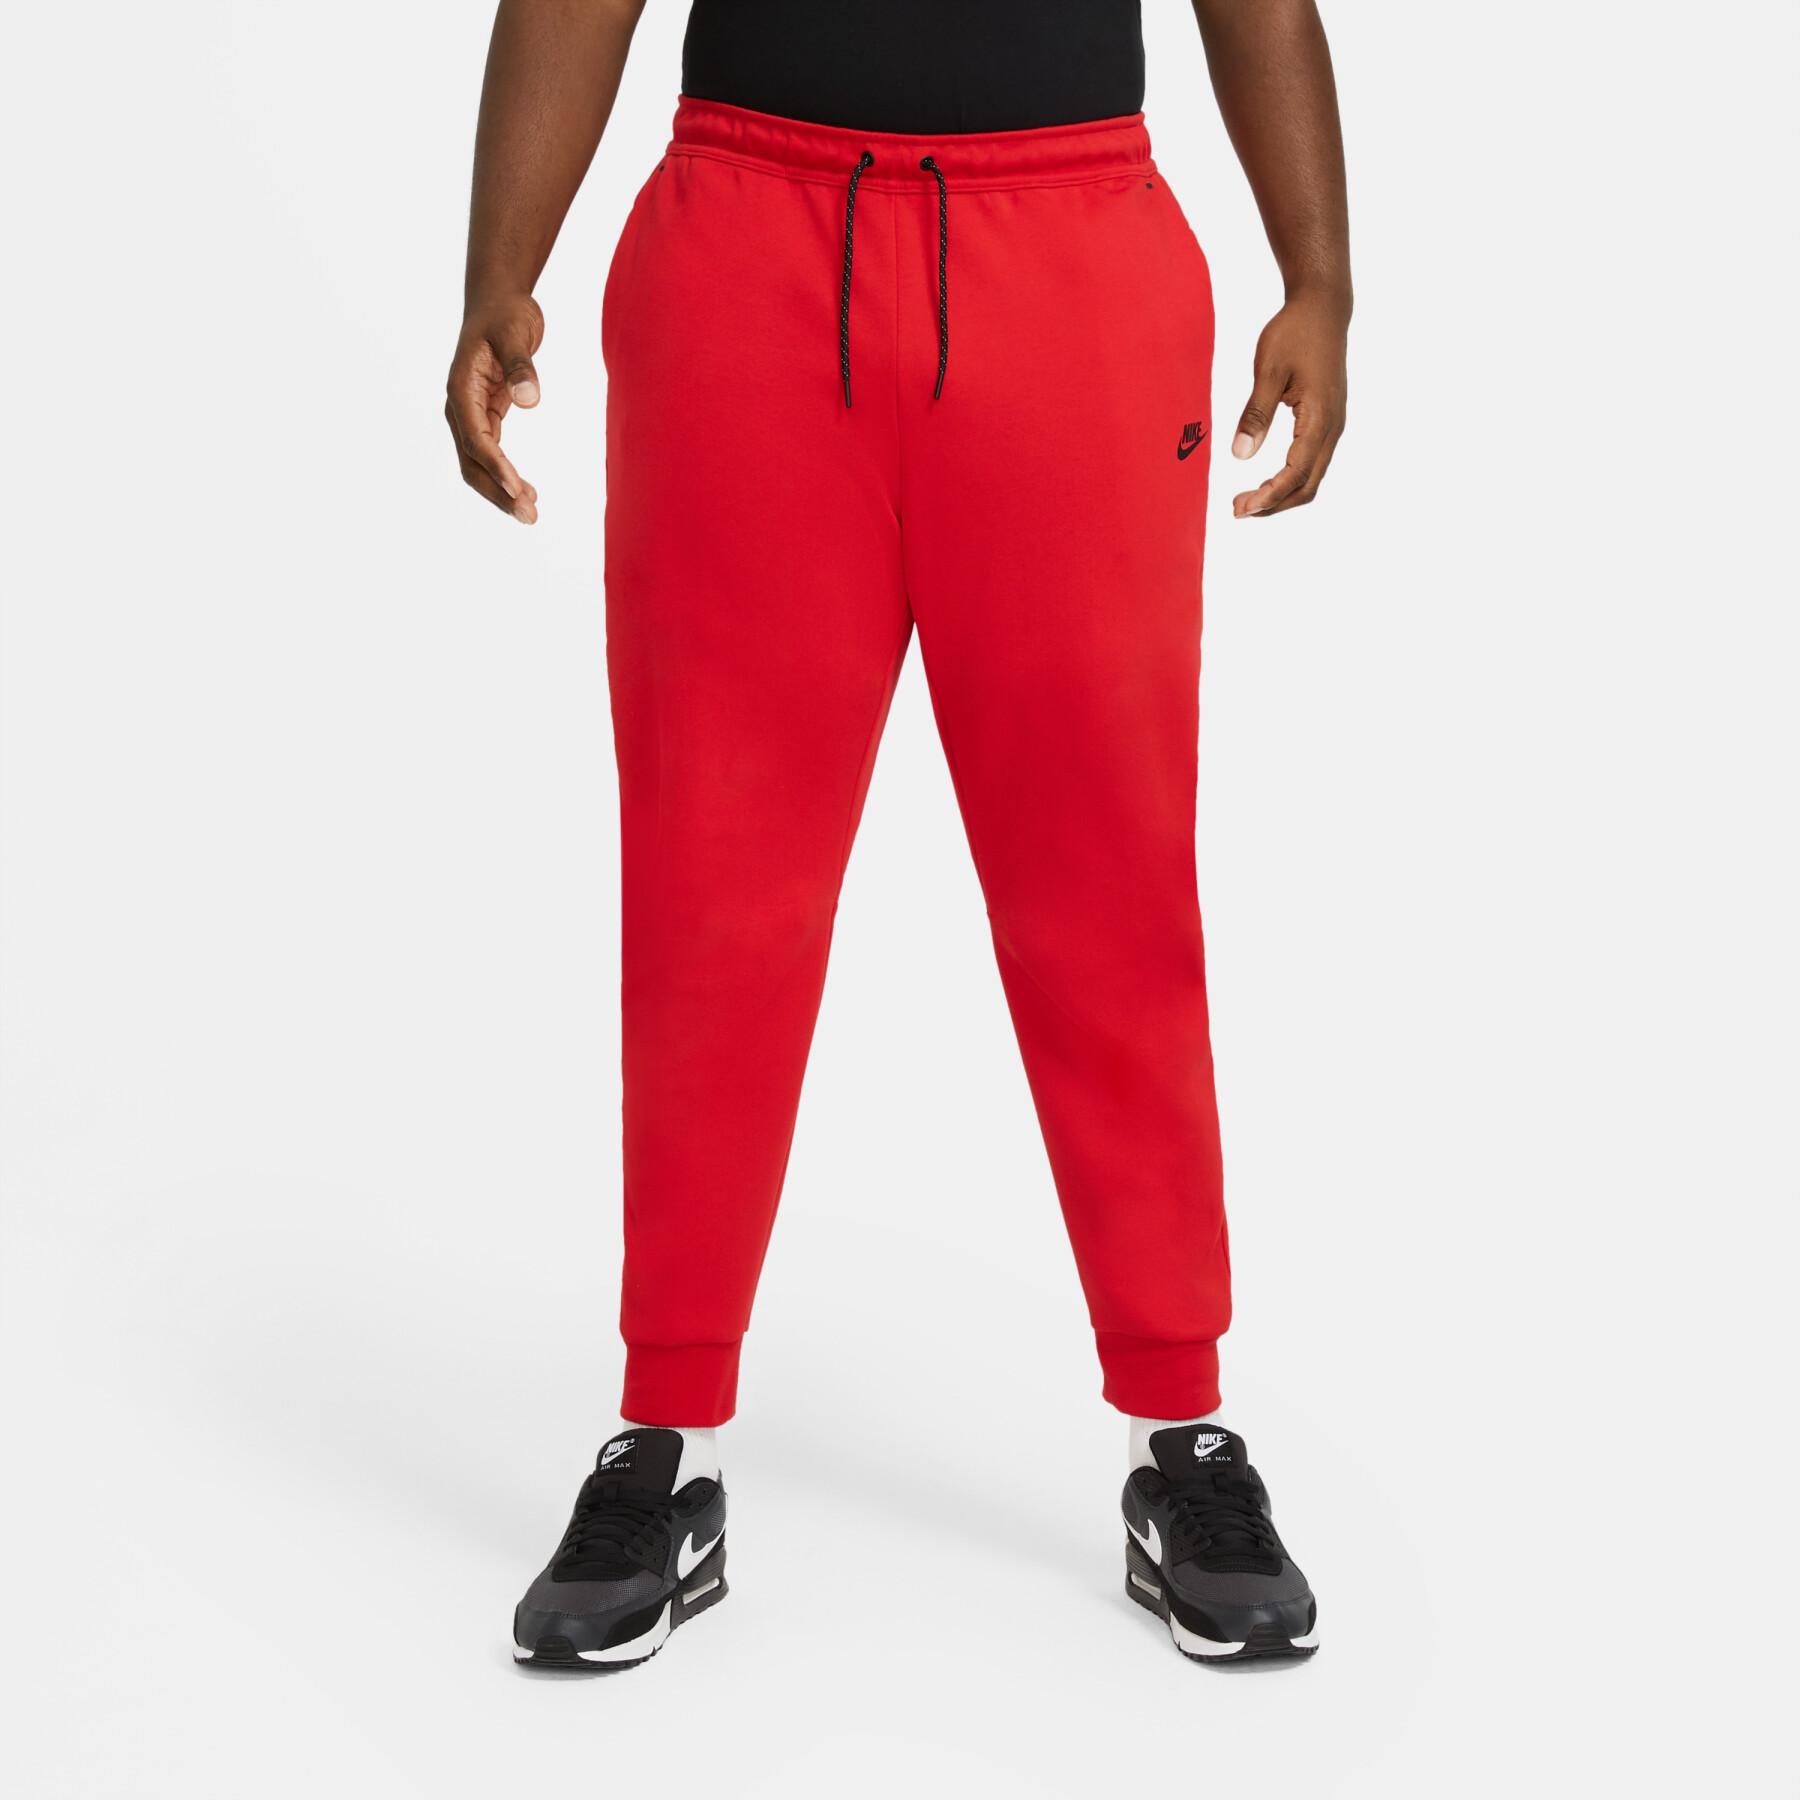 Jogging Nike Sportswear Tech Fleece - Jogging - Men's clothing - Lifestyle